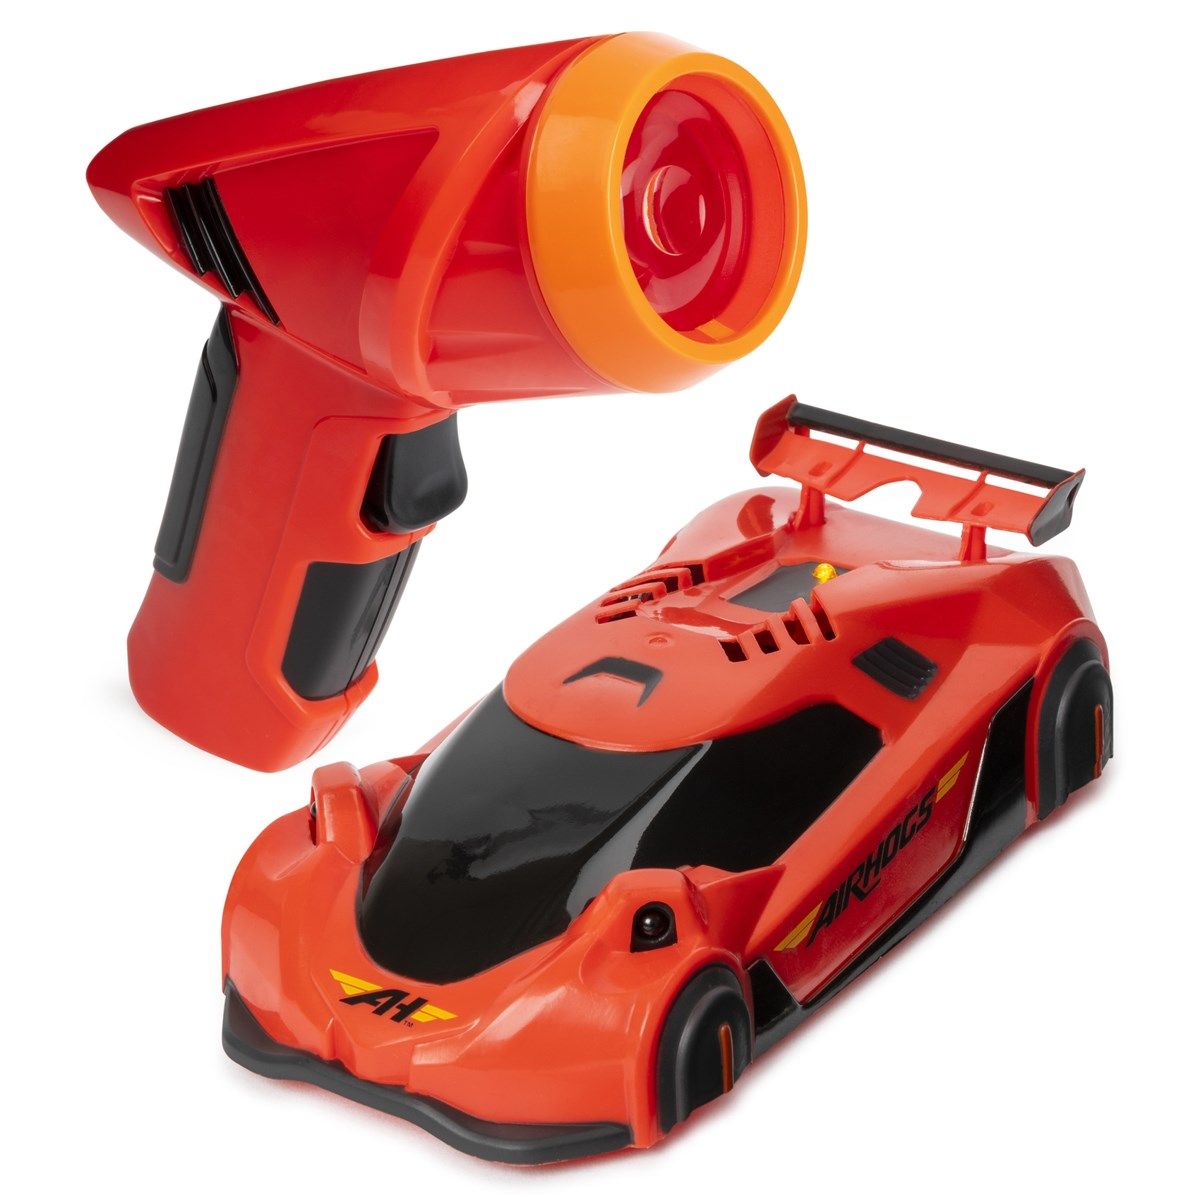 Air Hogs - Zero Gravity Laser Racer - Red (6054126)